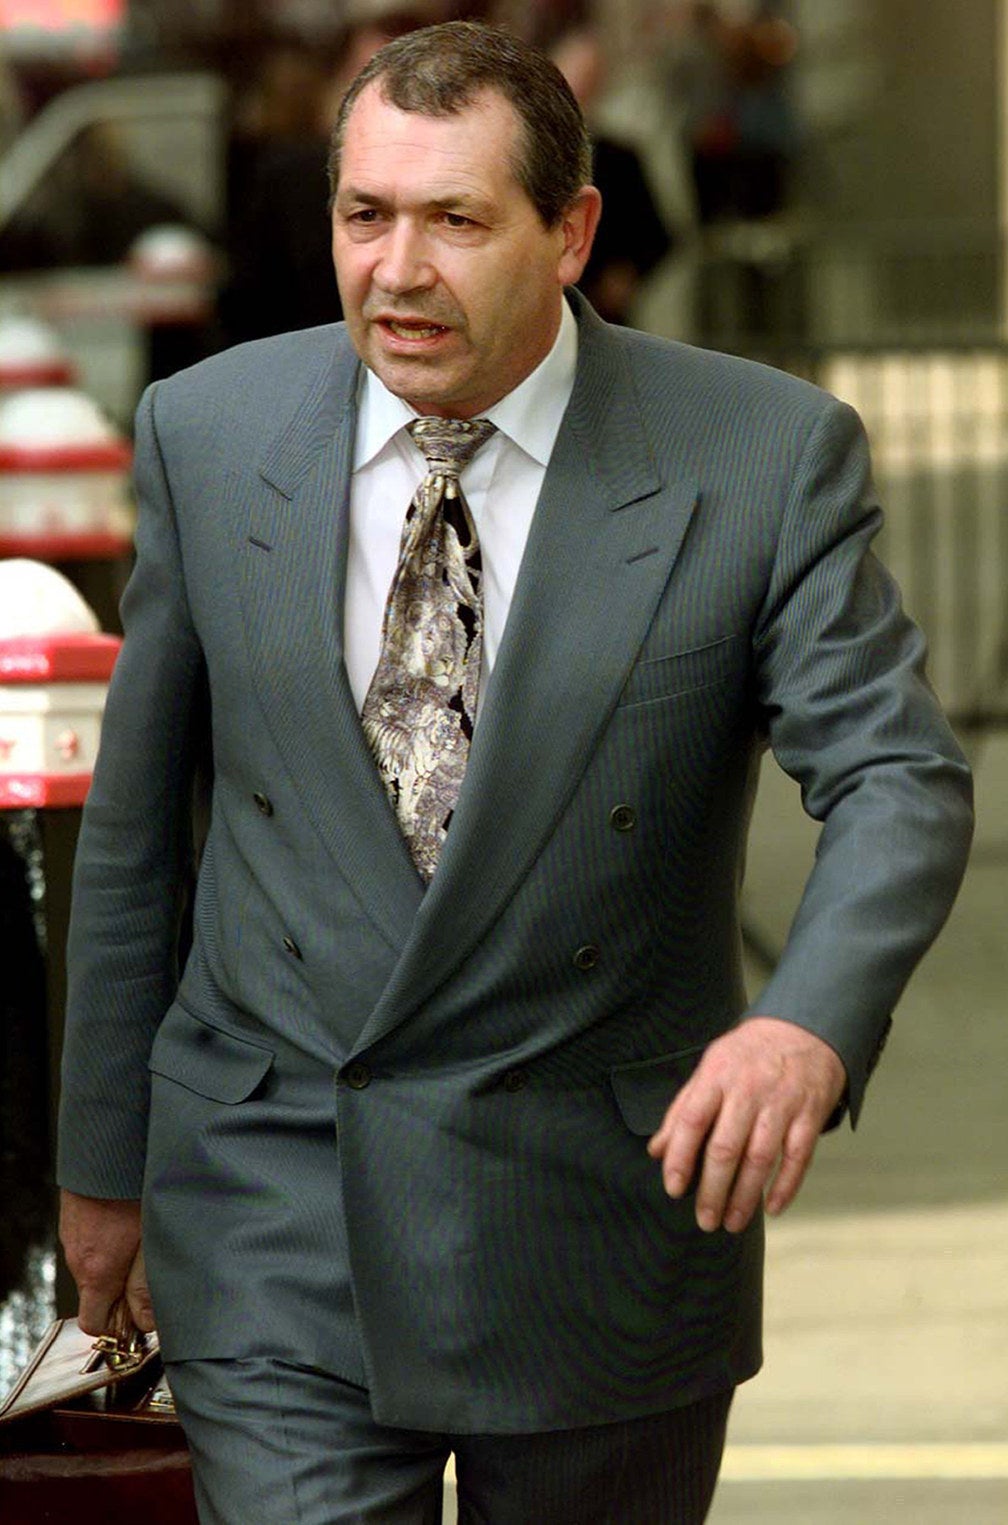 John Palmer pictured in 2001